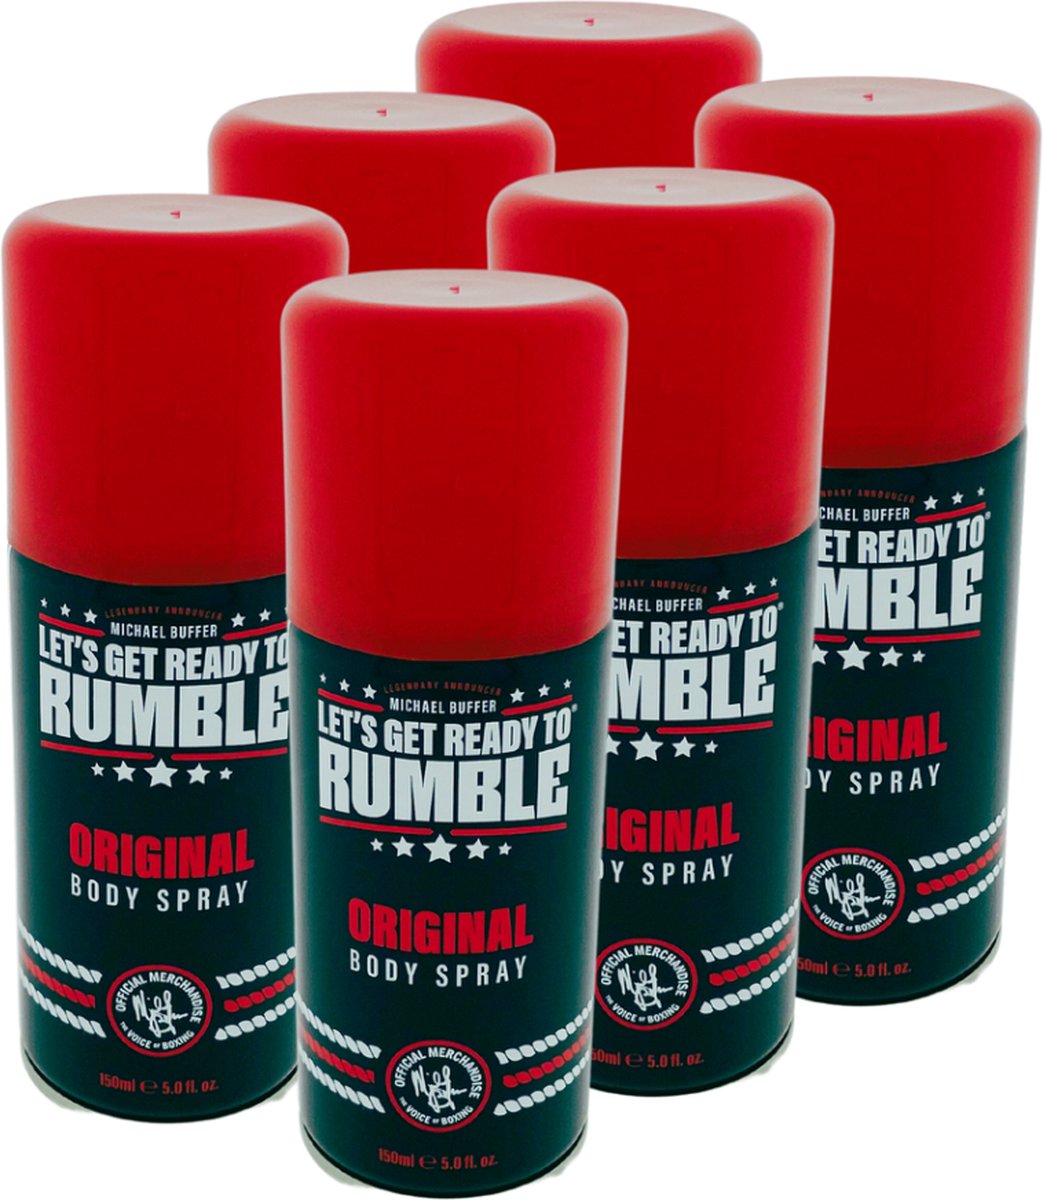 Let’s Get Ready To Rumble Bodyspray 150ml – Original 6x